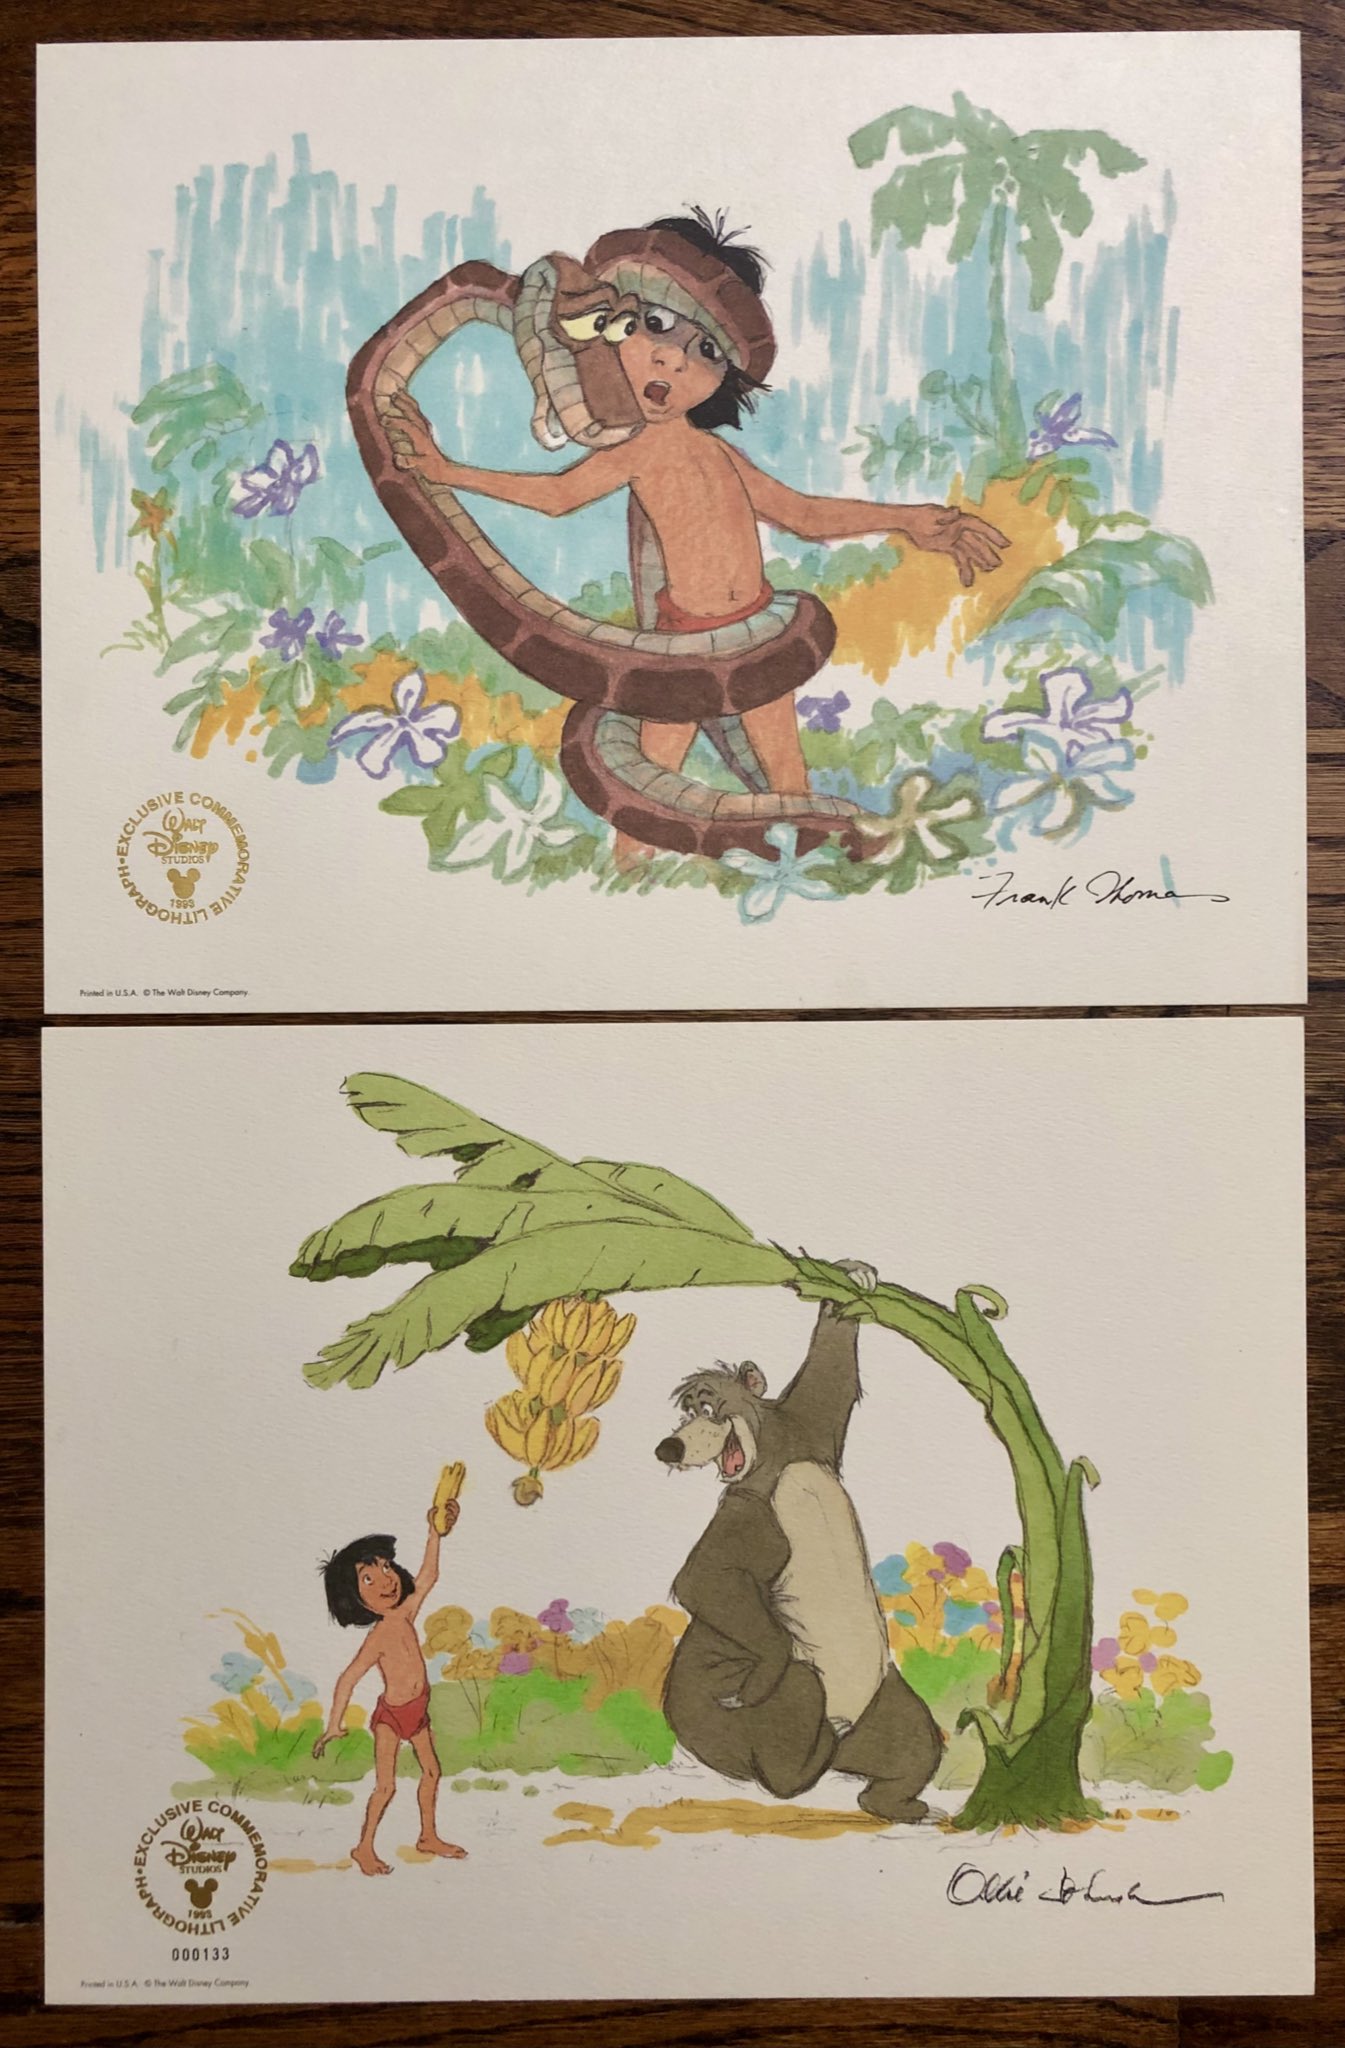 Walt Disney's The Jungle Book: Making a Masterpiece [Walt Disney Family Museum] [Book]